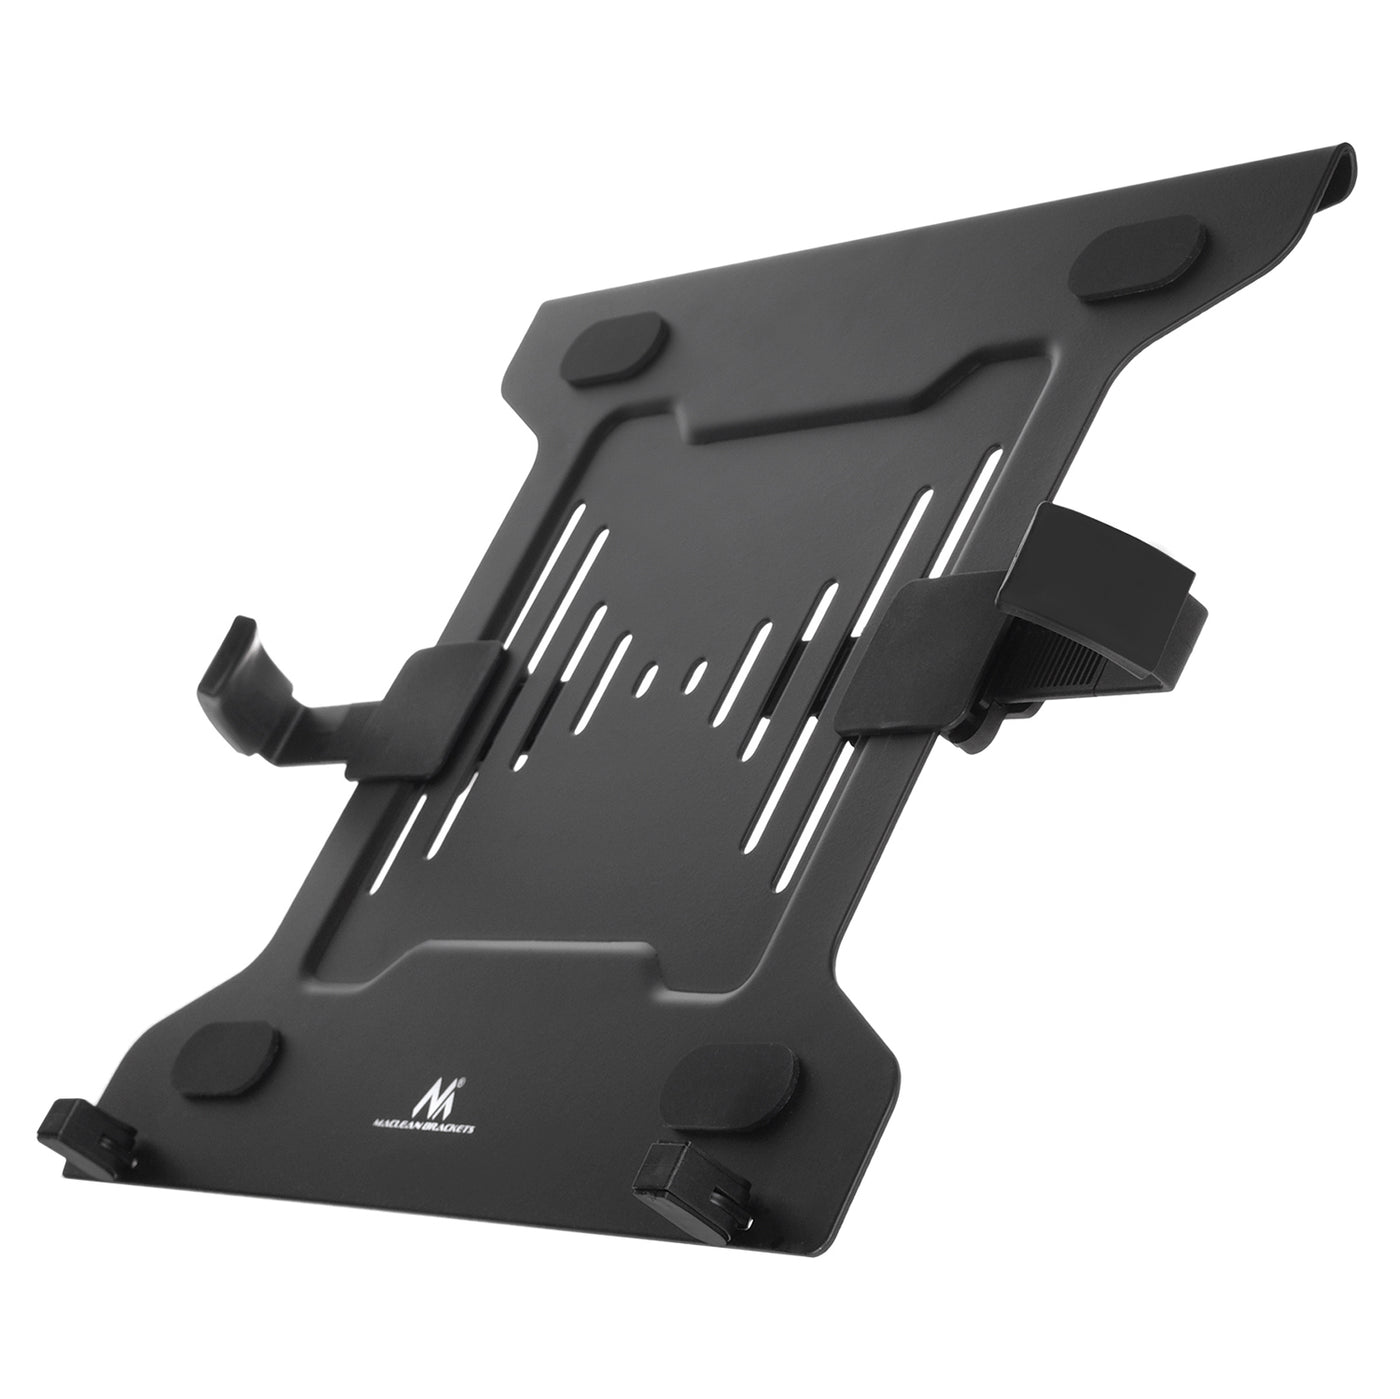 Laptop Bracket Mount Mounting Holder for Monitor Brackets Universal 23cm - 42cm